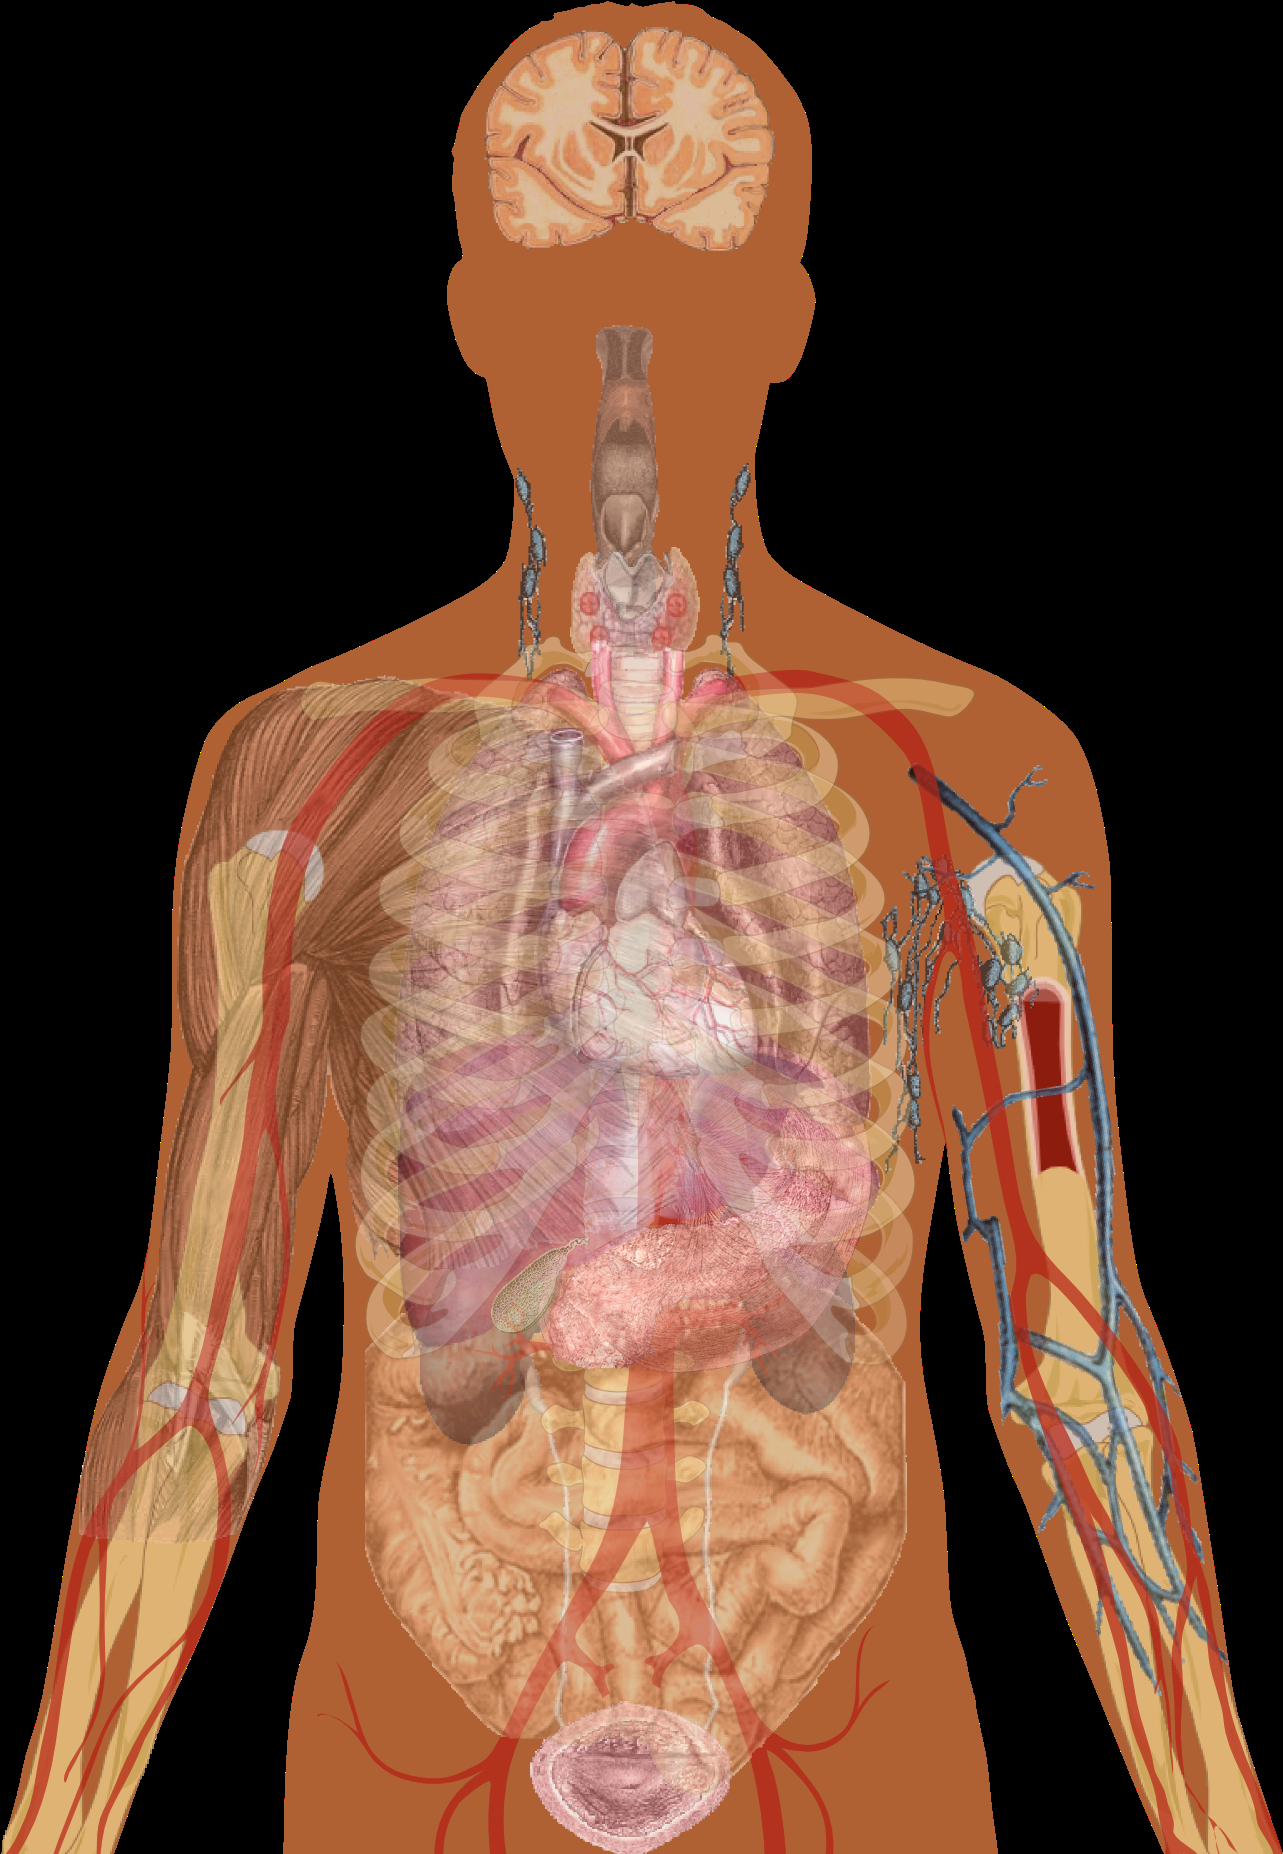 Female Lower Back Anatomy Internal Organs : Internal Organs Back View stock illustration ...